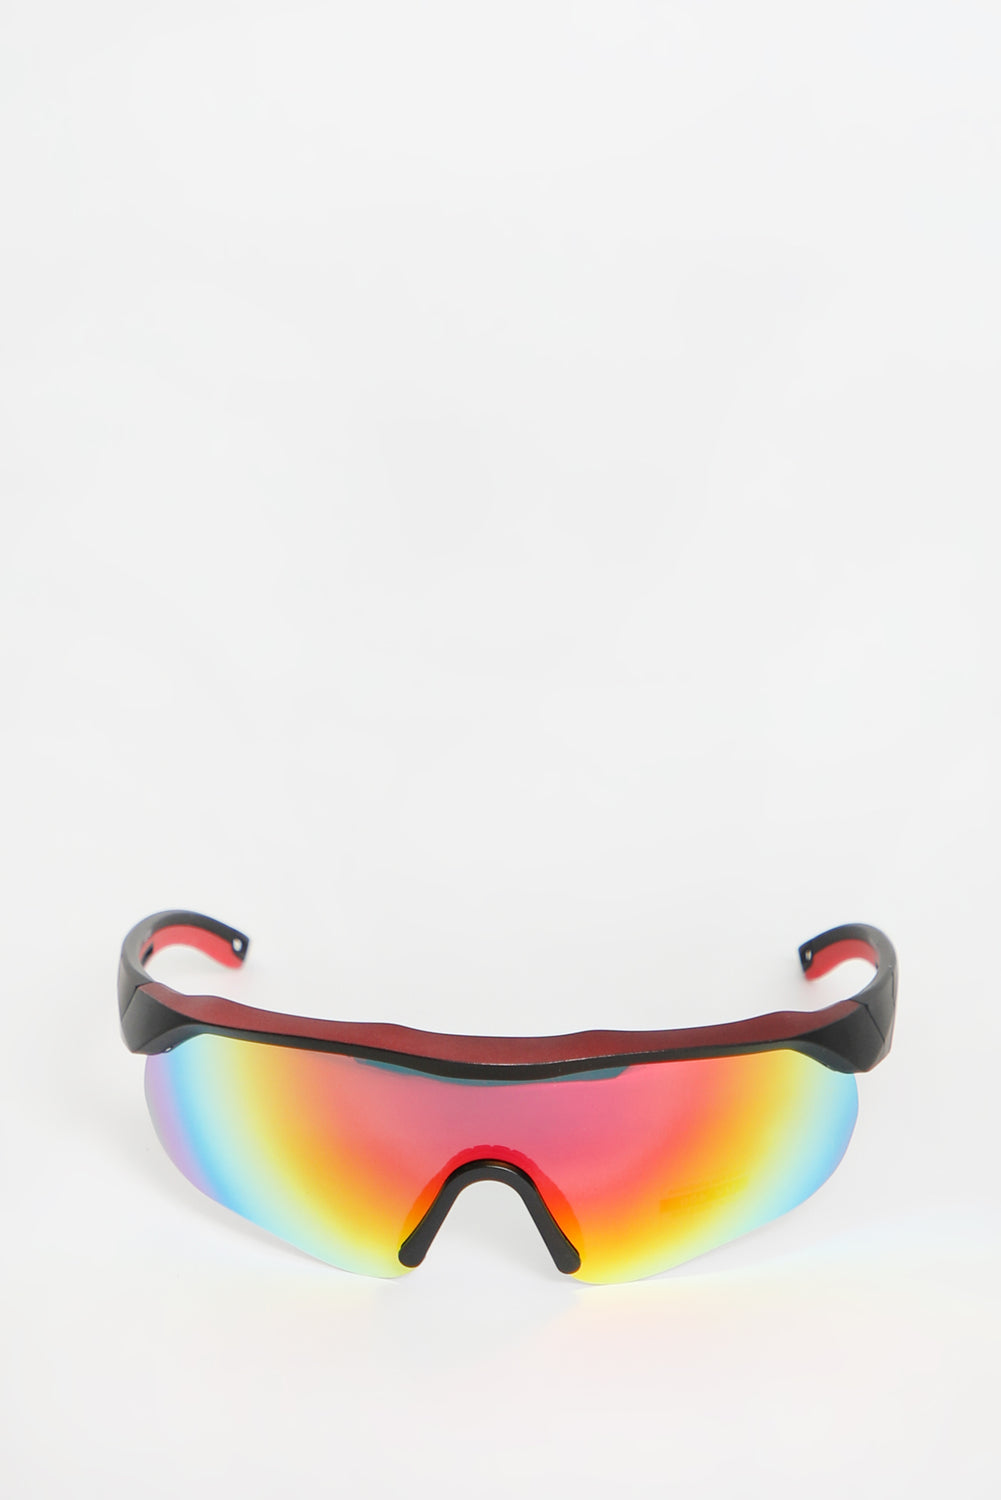 West49 Mirror Sport Sunglasses West49 Mirror Sport Sunglasses